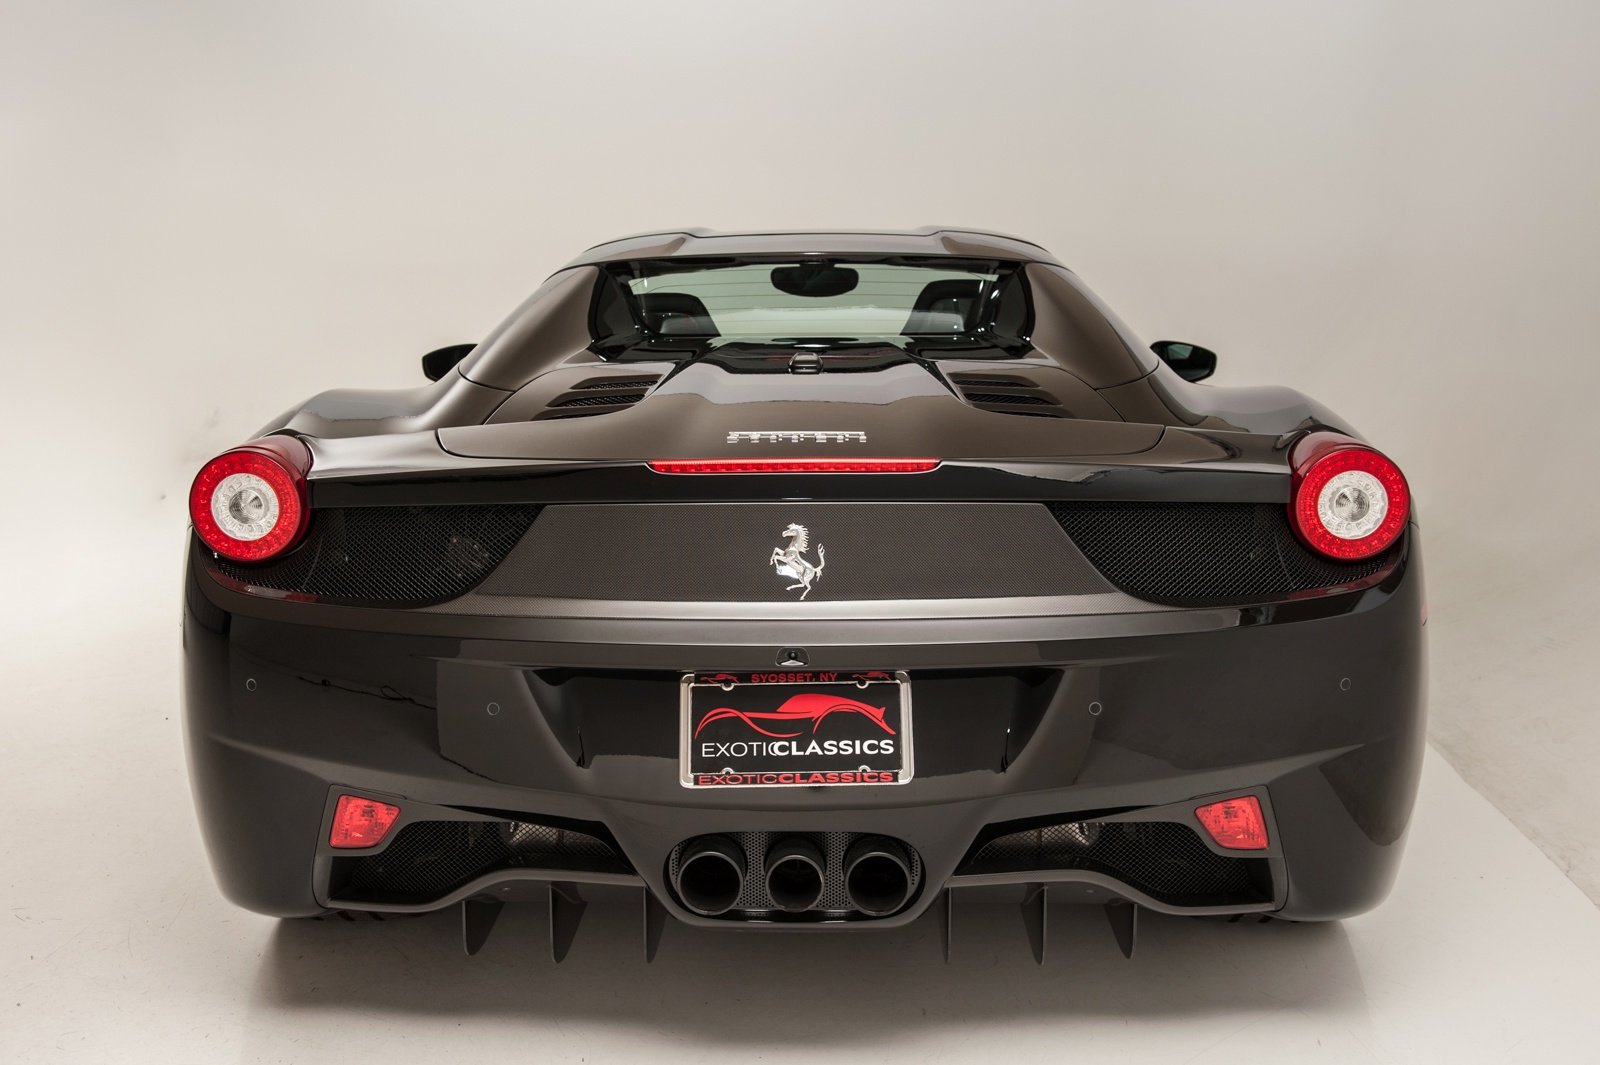 2013, Ferrari, 458, Spider, Nero, Black, Cars Wallpaper